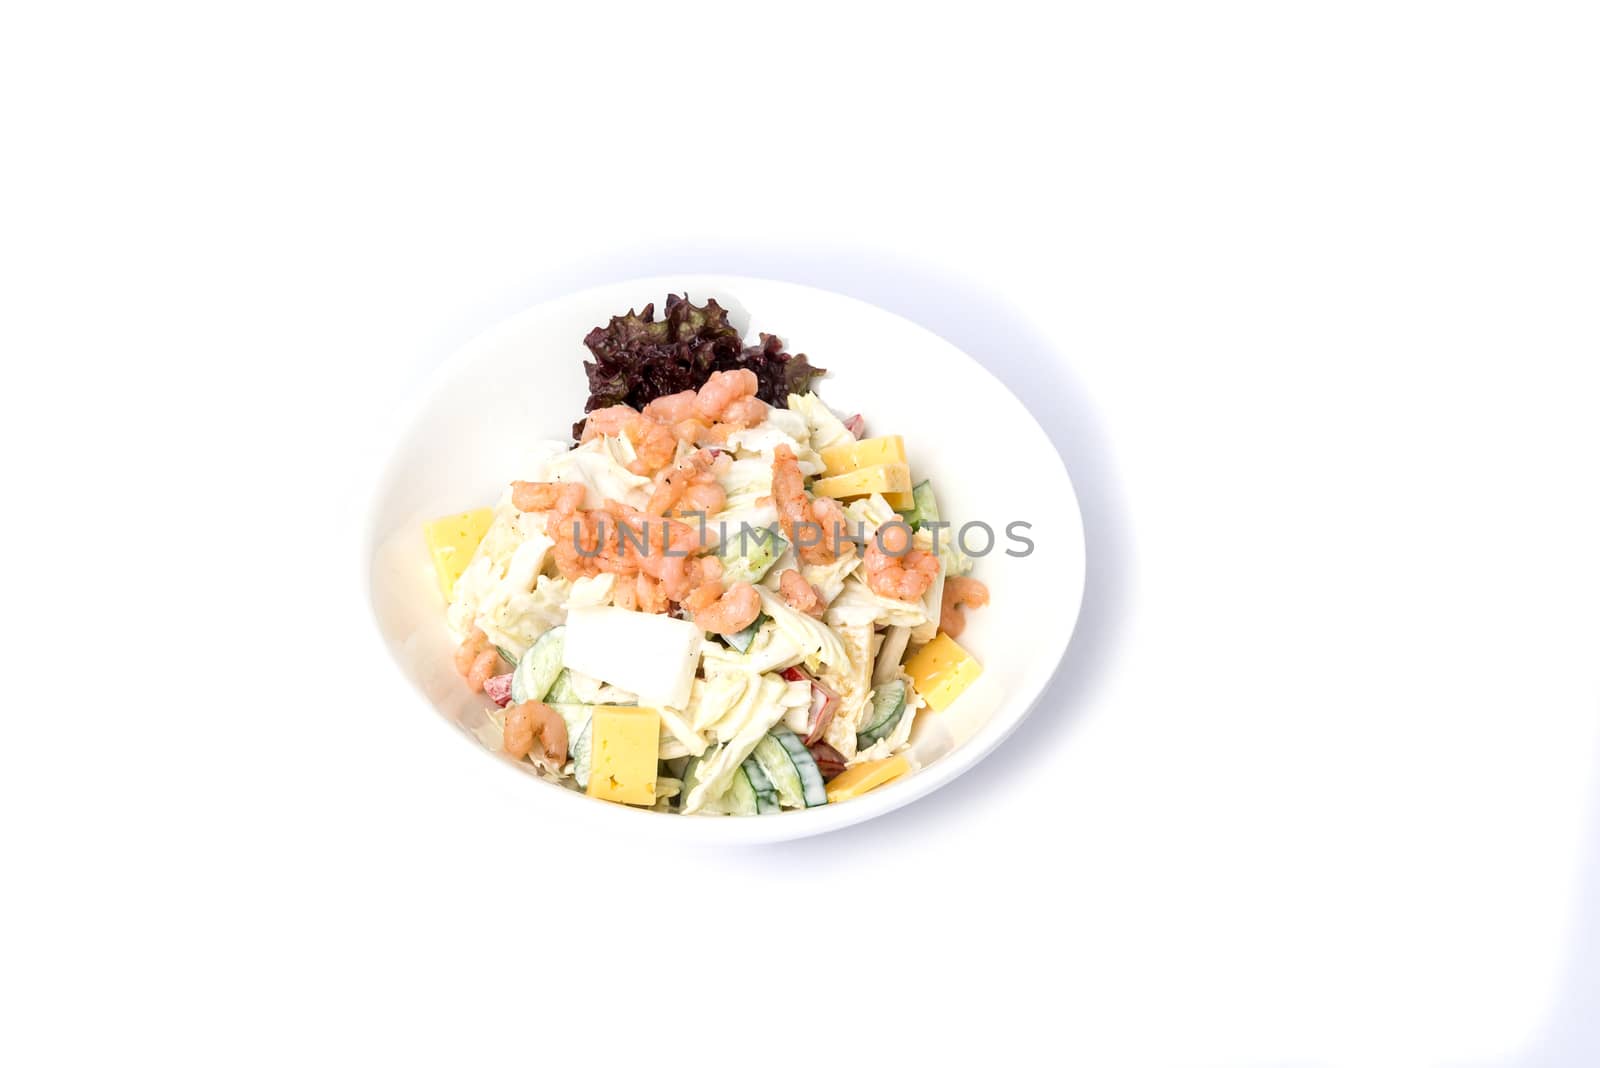 Salad buffet diet beef fish shrimp vegetable yogurt